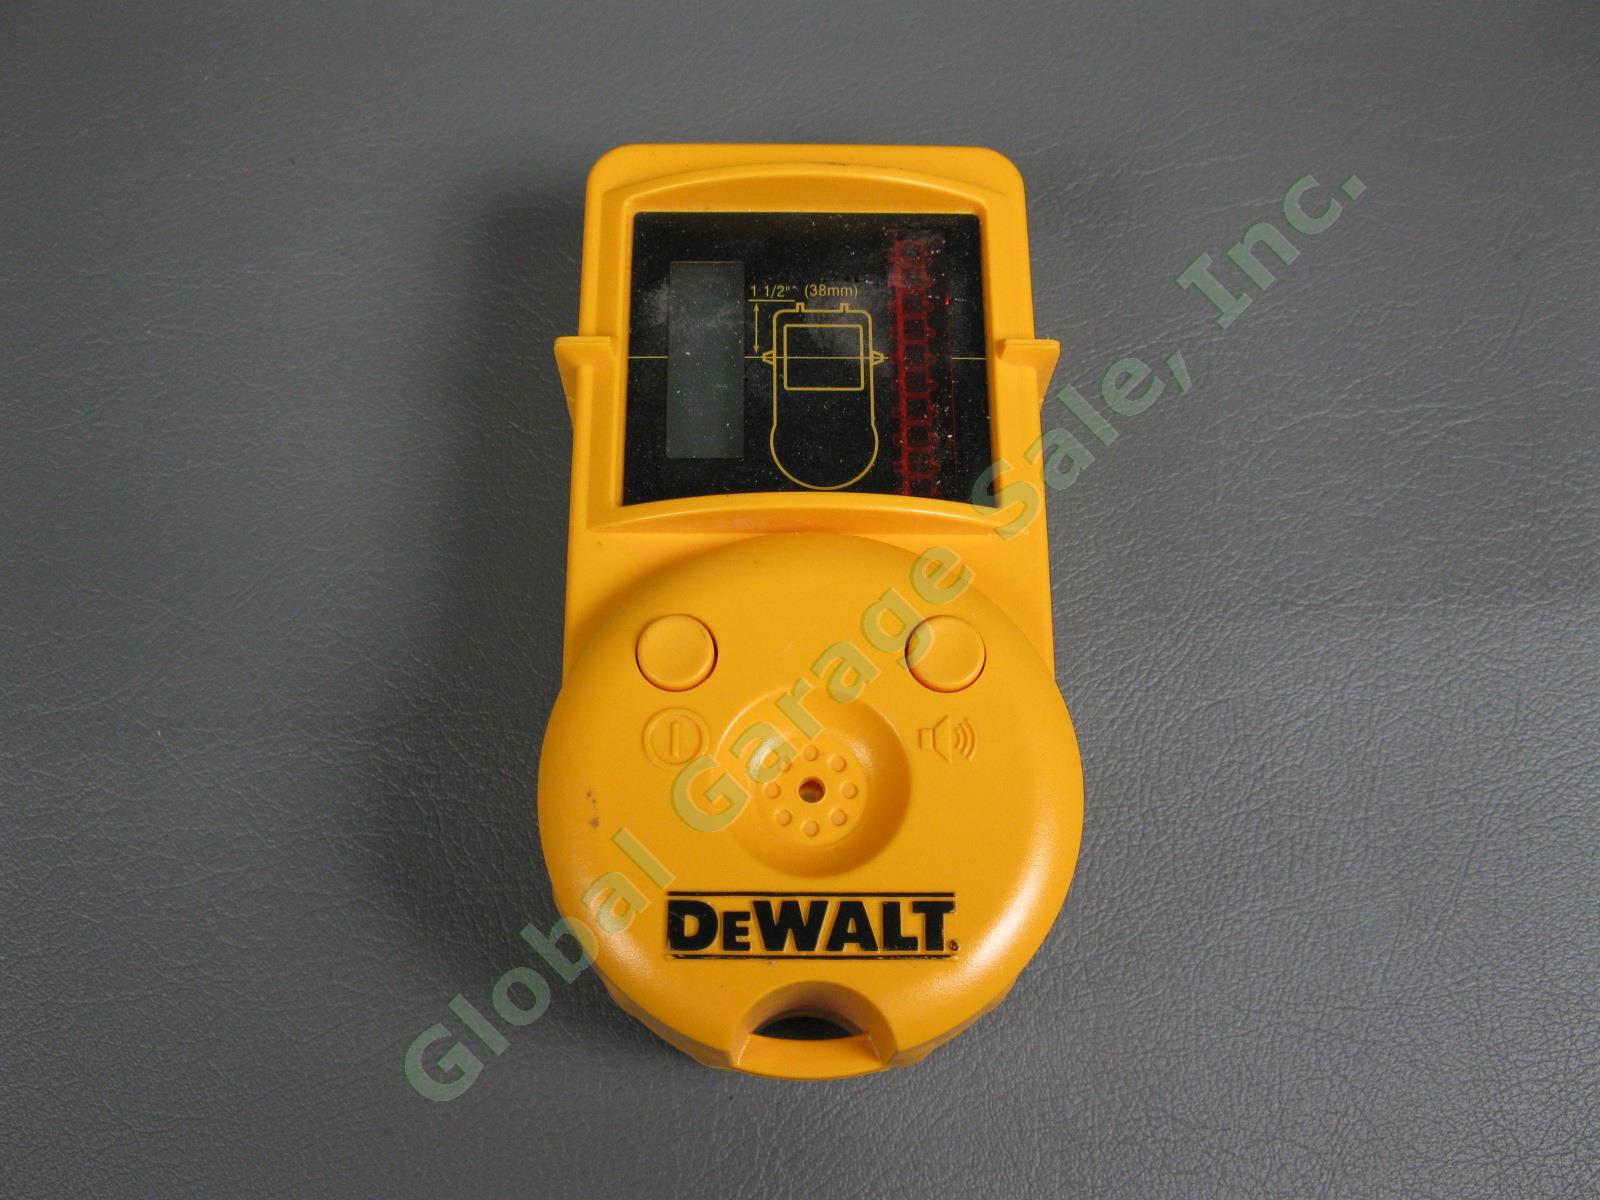 DeWalt DW073 Cordless Rotary Laser Level DW0732 Digital Laser Detector Case NR 4